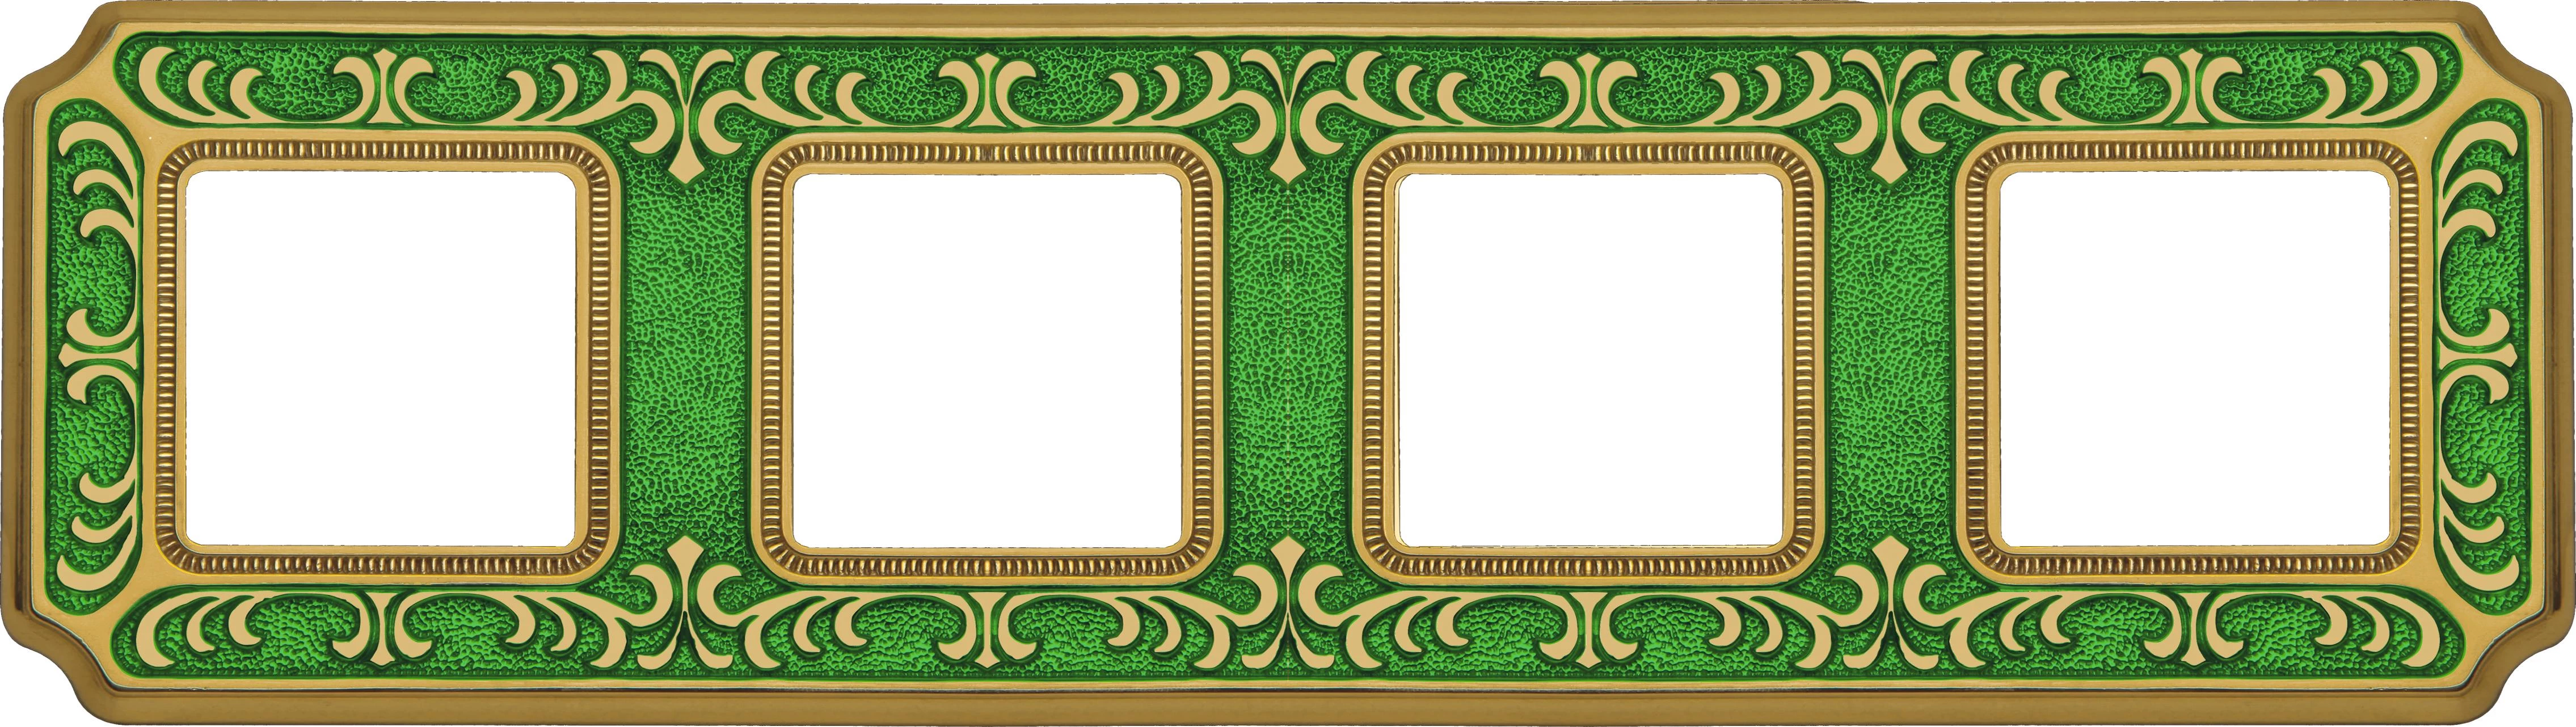  артикул FD01354VEEN название Рамка четверная, цвет Изумрудно-зеленый, Siena, Fede